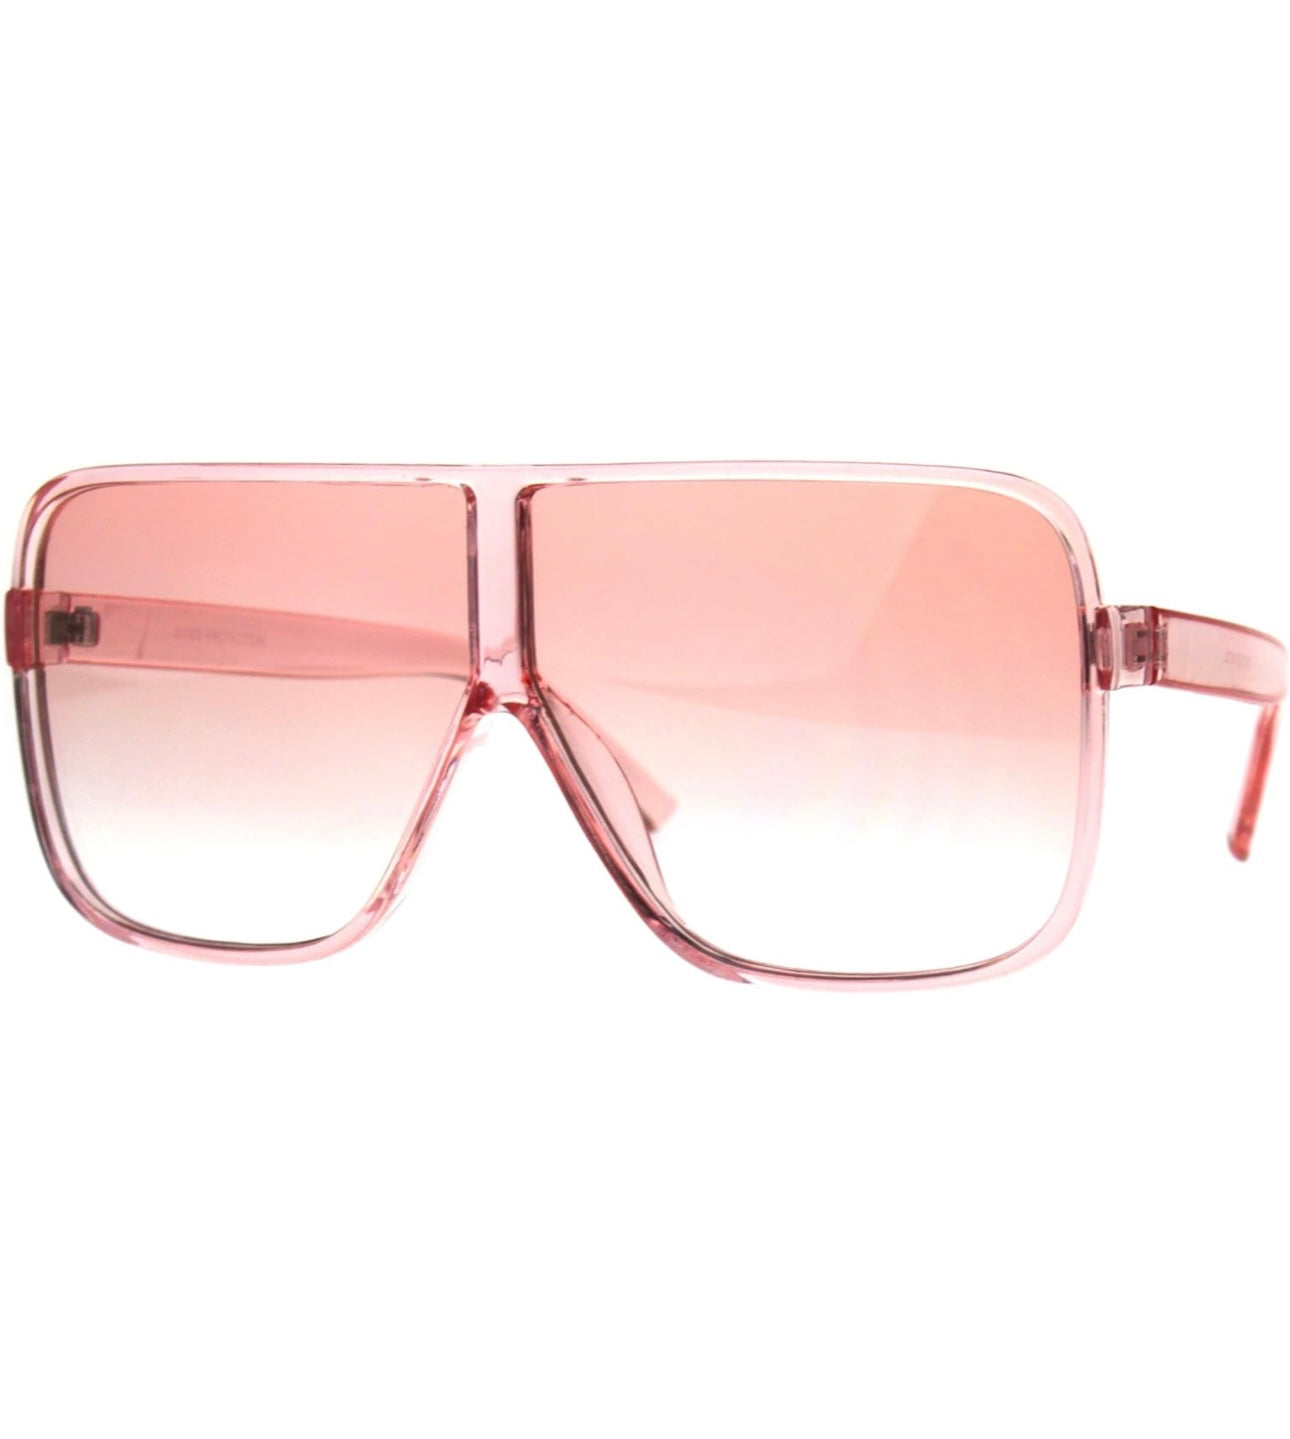 Super Oversized Fashion Sunglasses Flat Top Square Translucent Frame